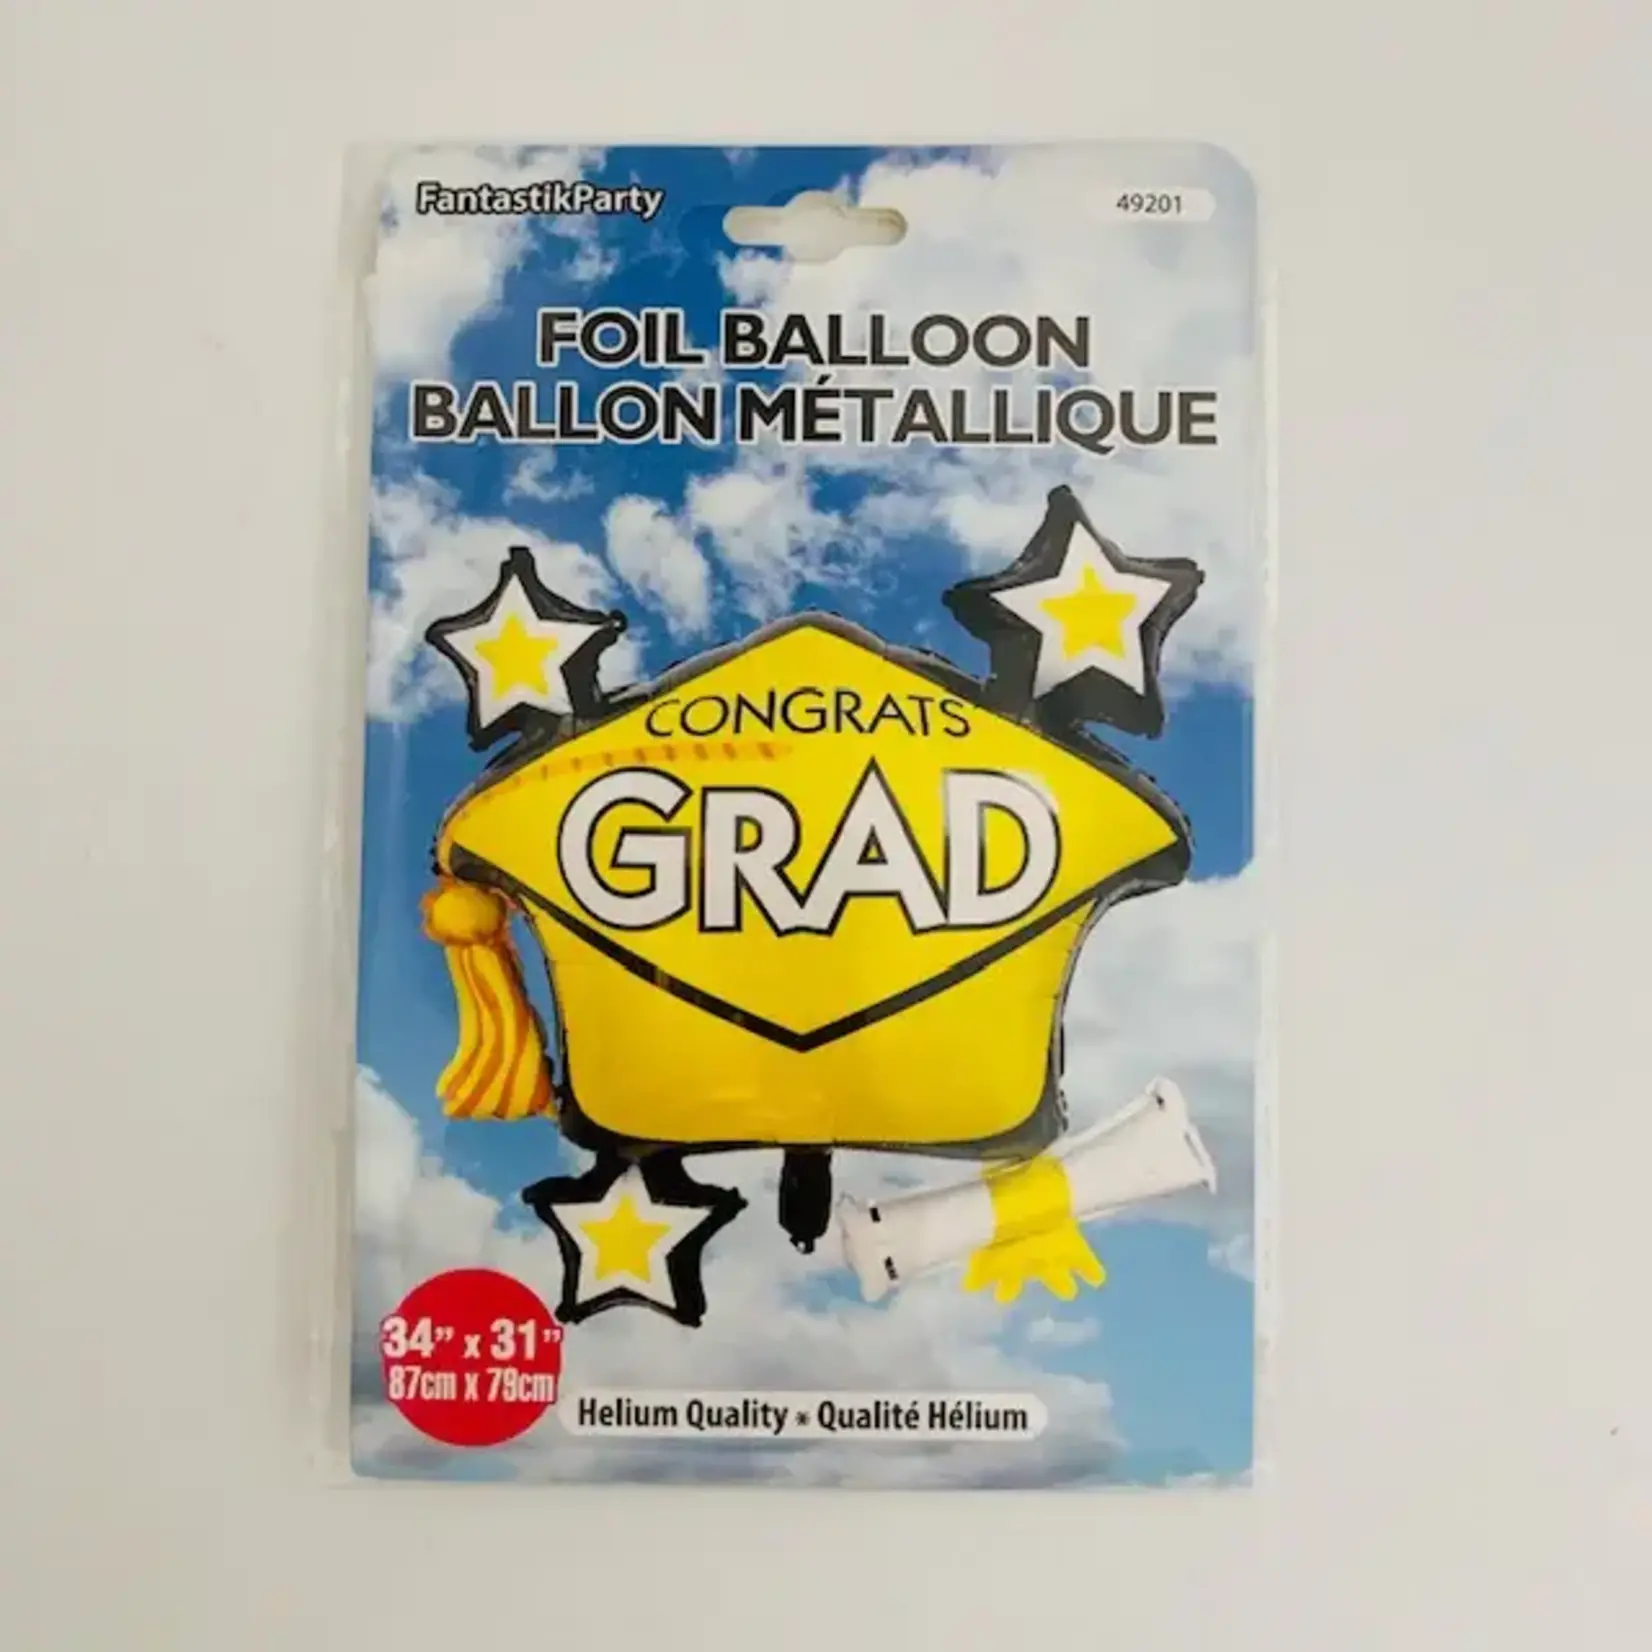 Giant Foil Balloon - Graduation 34"x31"